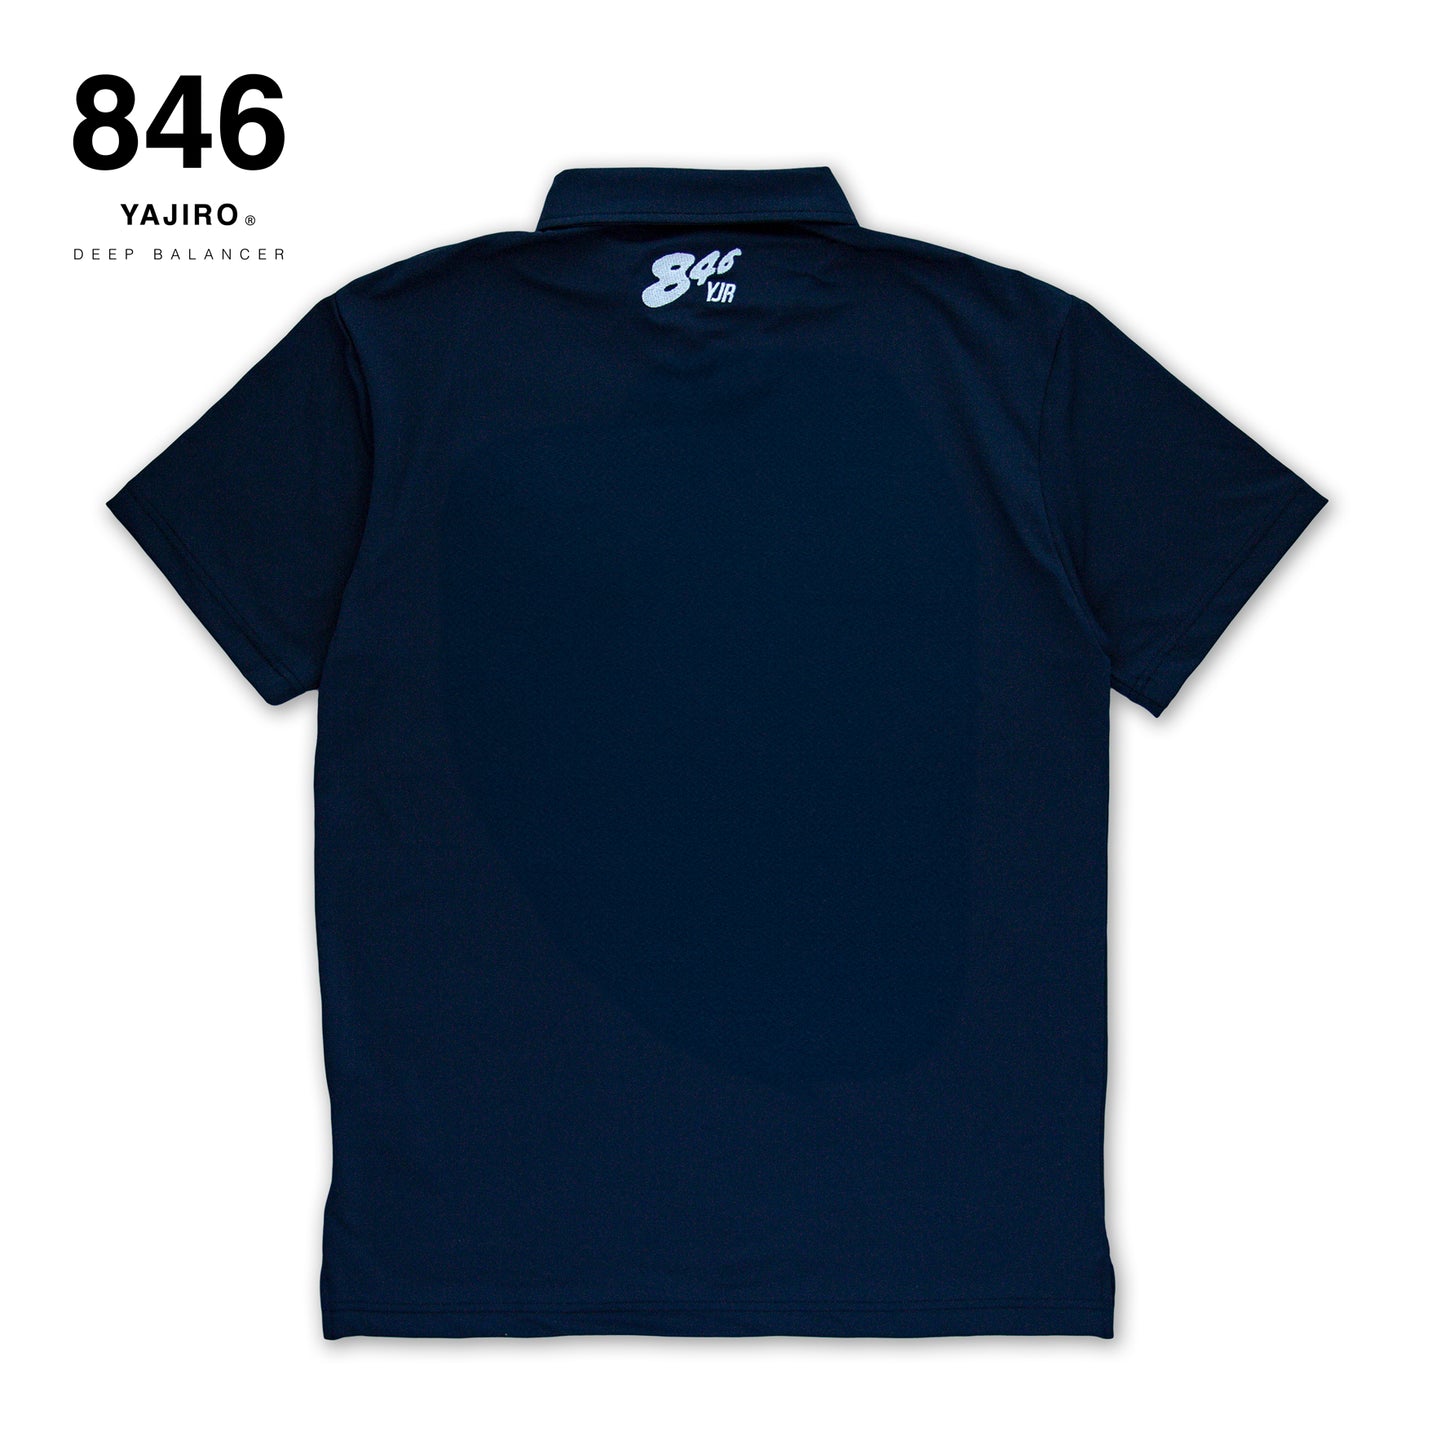 846YAJIRO GOLF Polo shirt NAVY (Unisex)